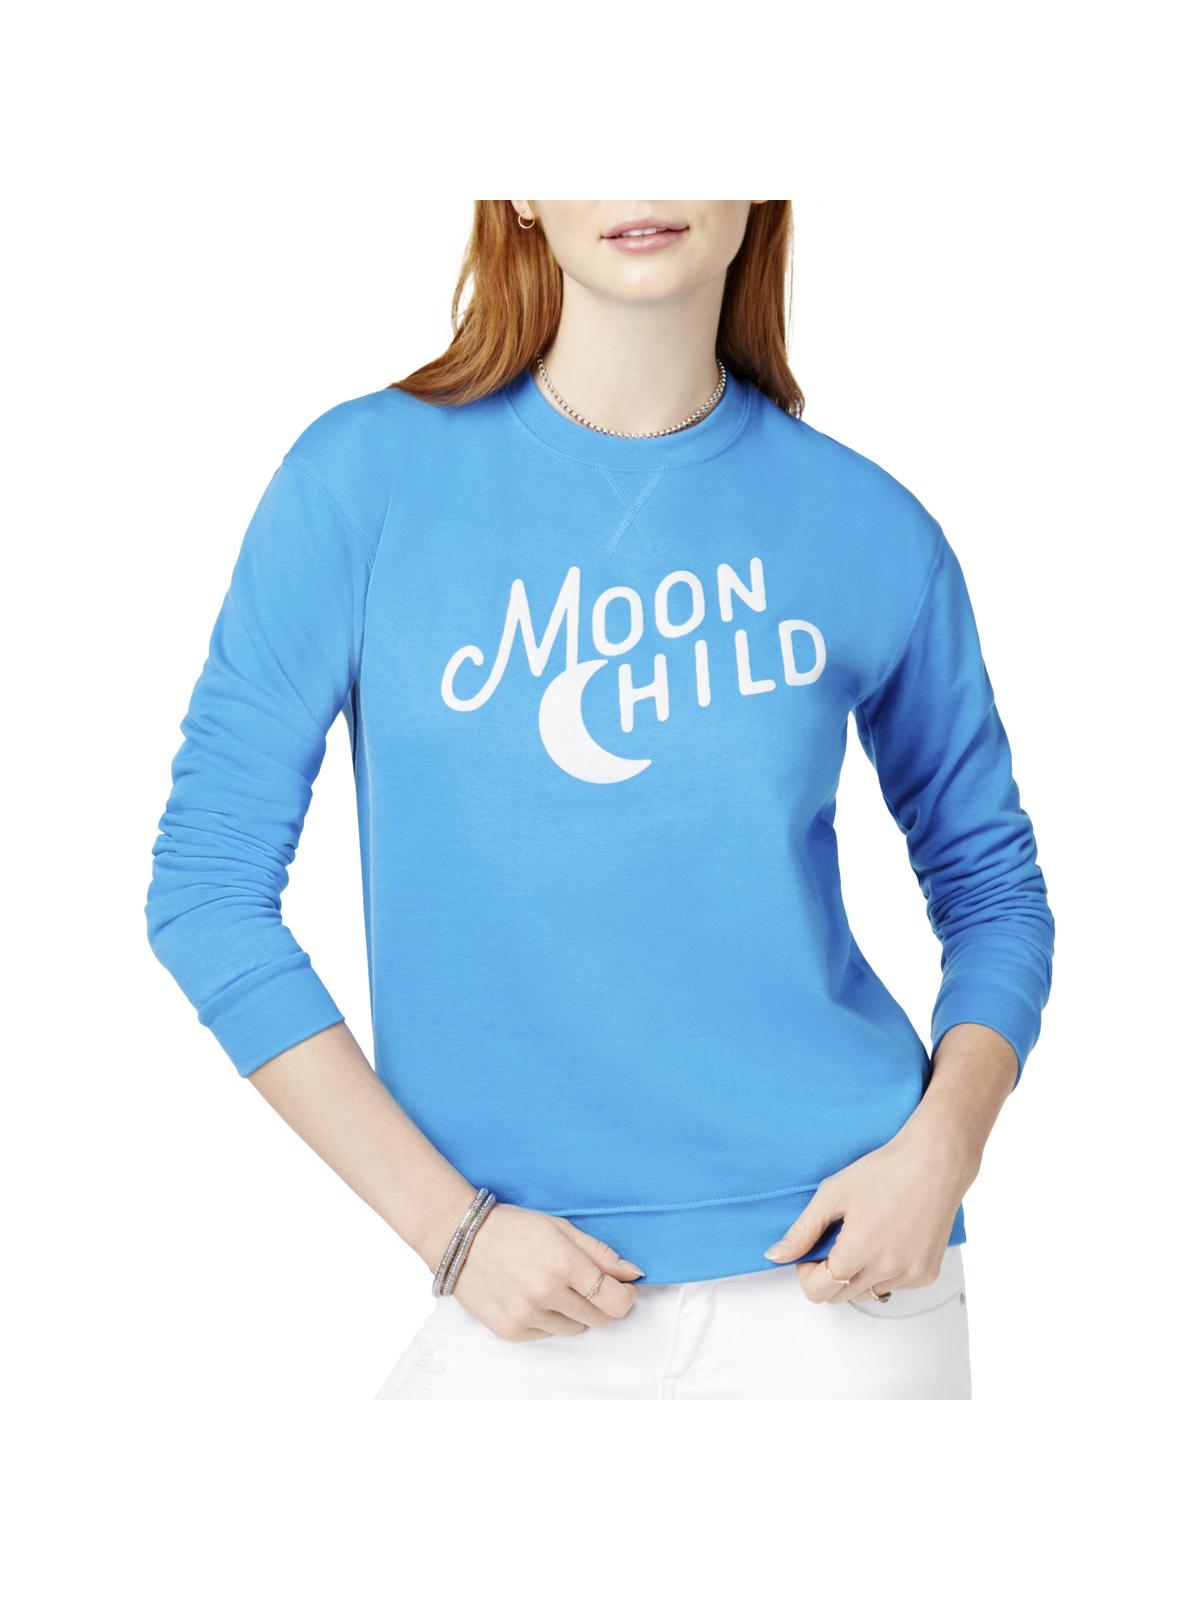 Kid Dangerous Womens Moon Child Sweatshirt, Blue, Medium - image 1 of 2